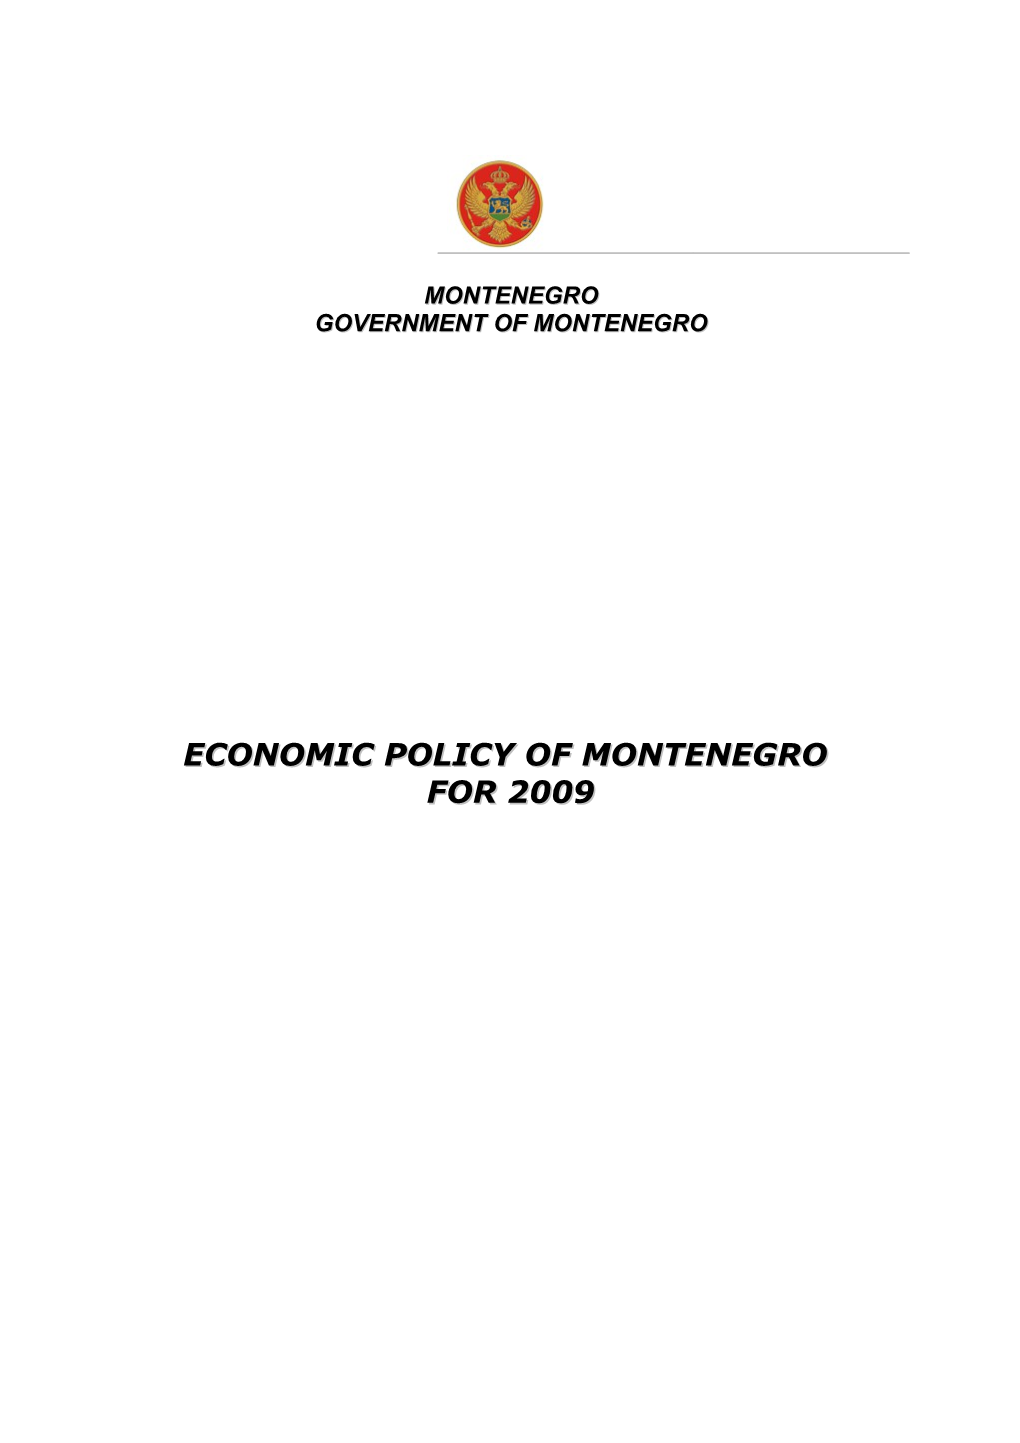 Economic Policy of Montenegro for 2009